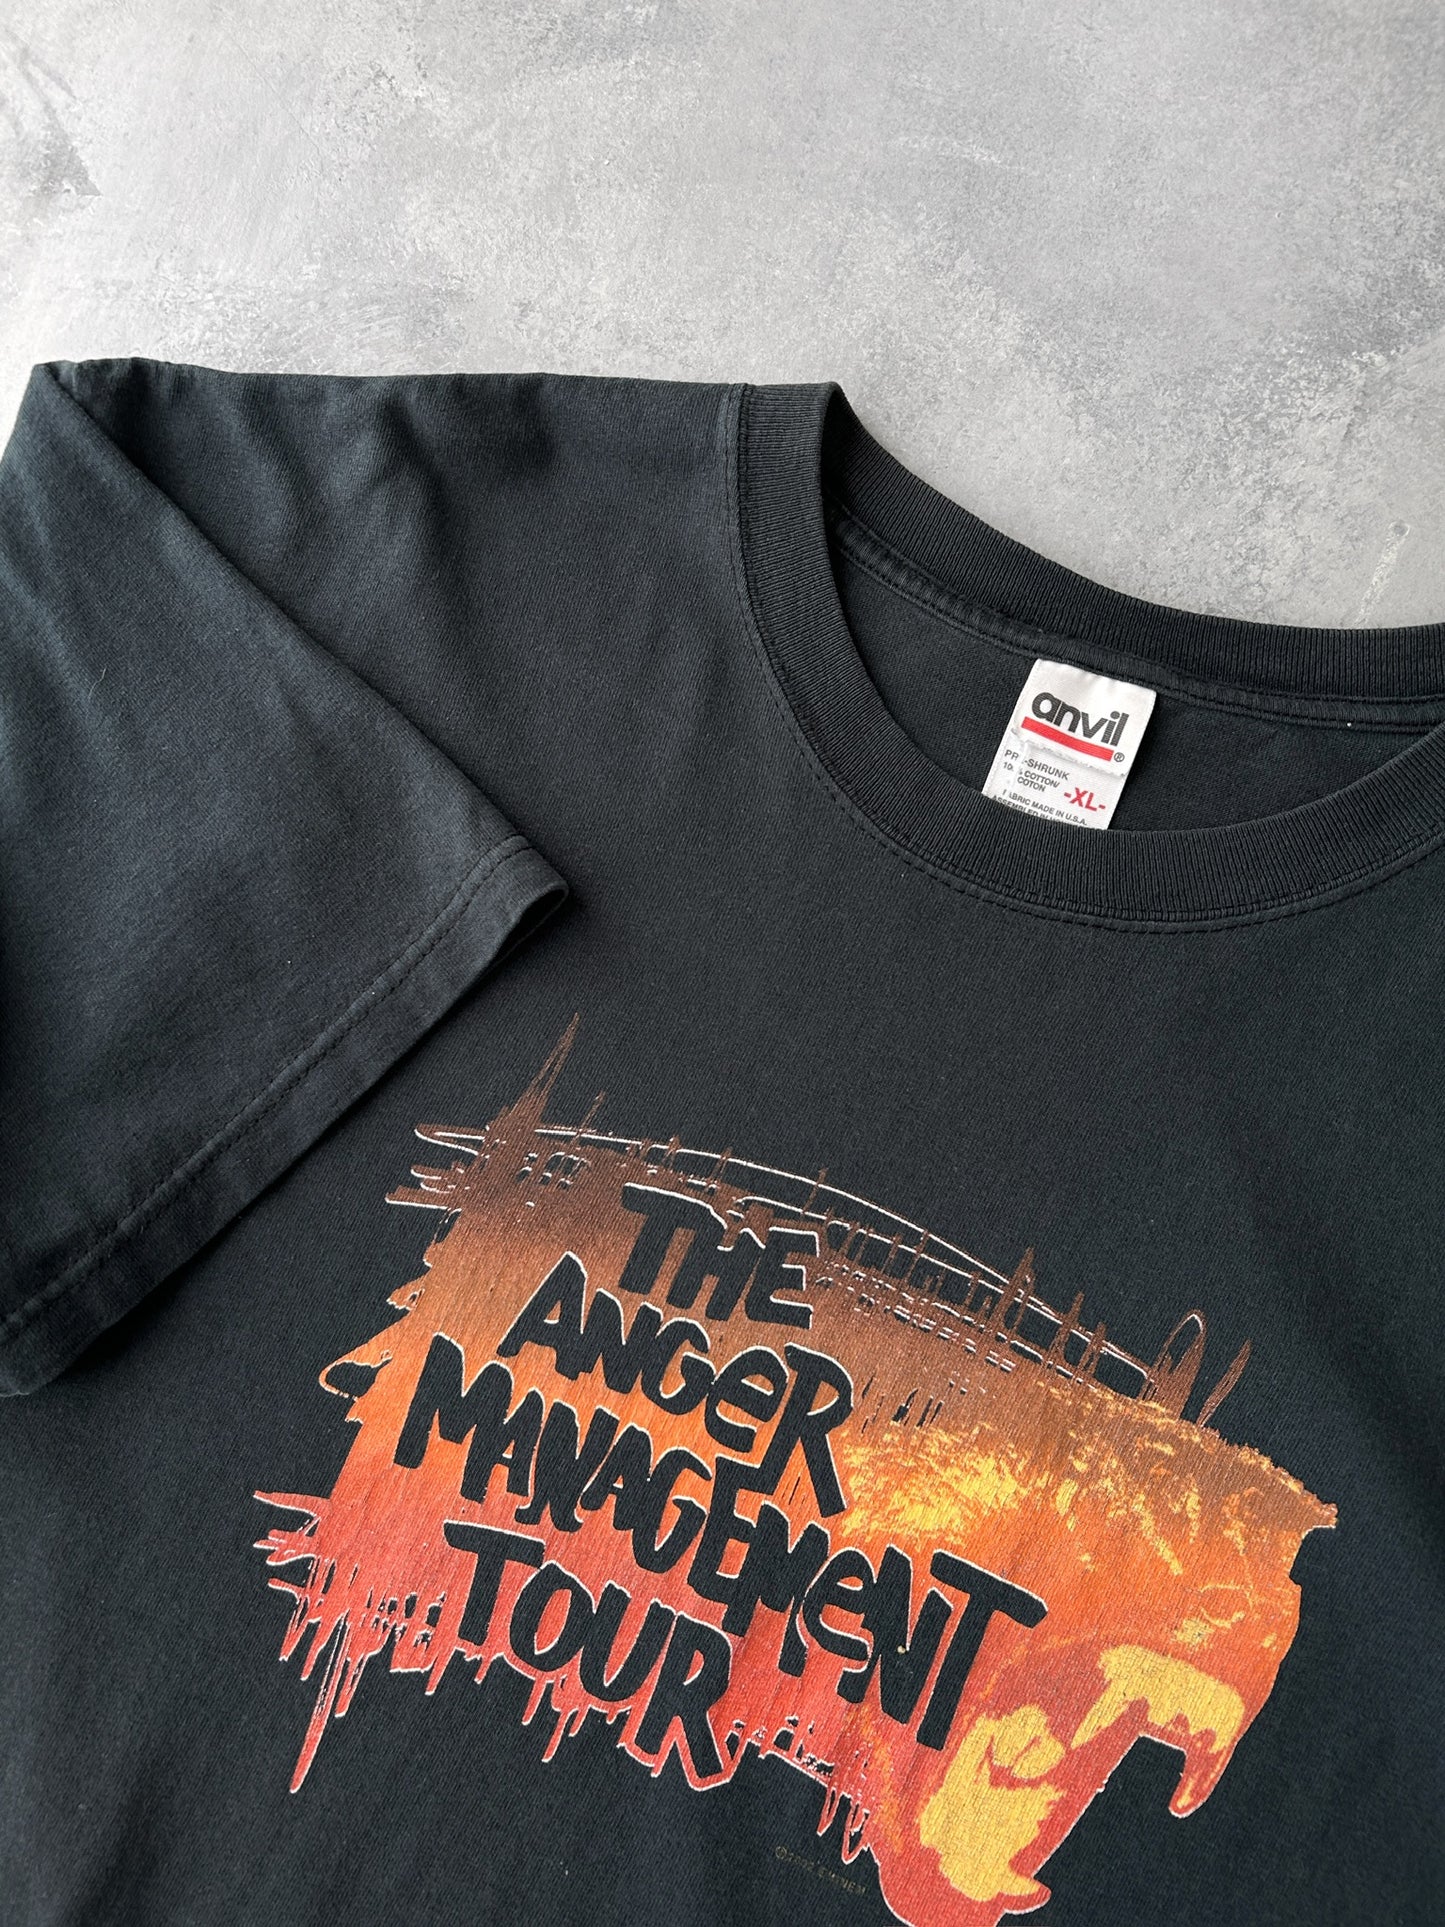 Eminem The Anger Management Tour T-Shirt '02 - XL